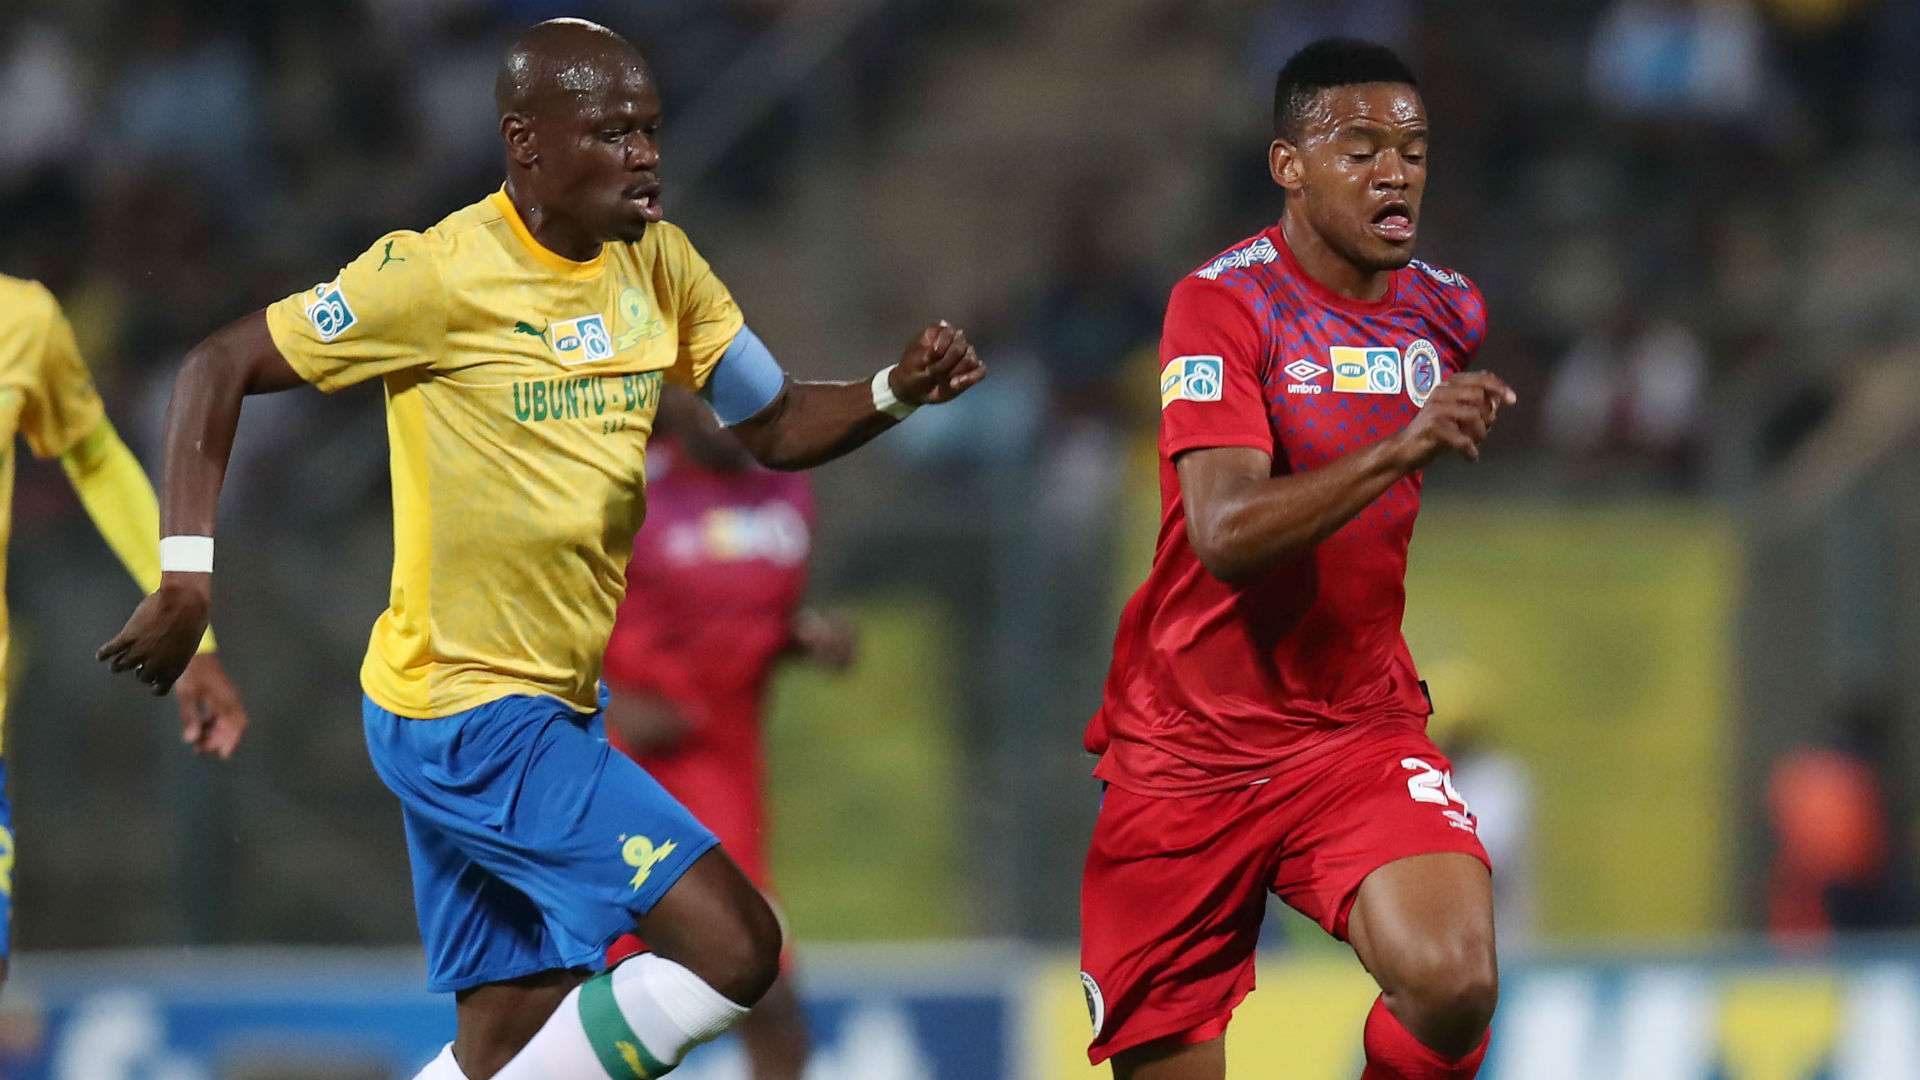 Sipho Mbule of SuperSport United challenged by Hlompho Kekana of Mamelodi Sundowns, September 2019